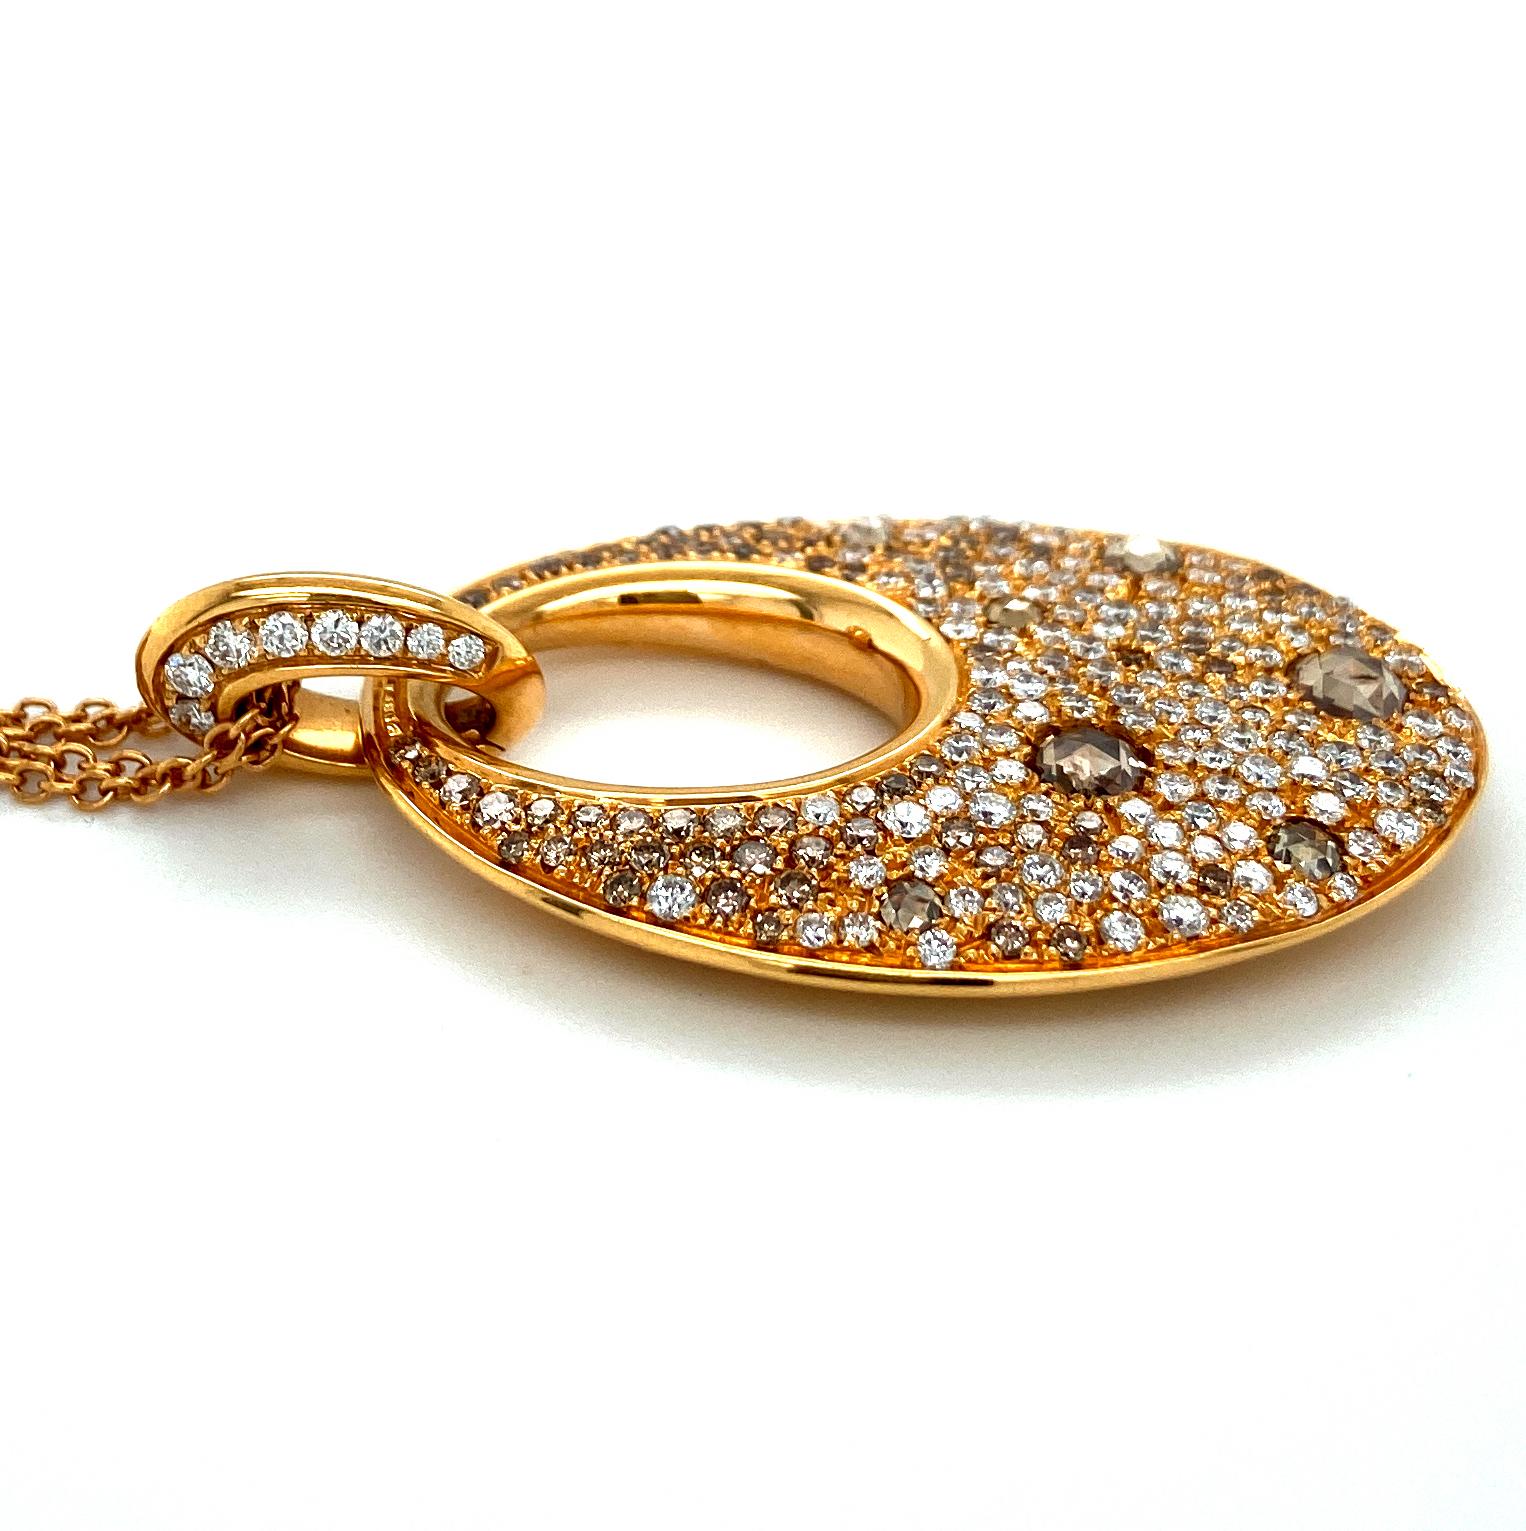 Taille brillant Collier en or rose 18 carats, pendentif serti de diamants blancs et cognac de 3,29 carats en vente